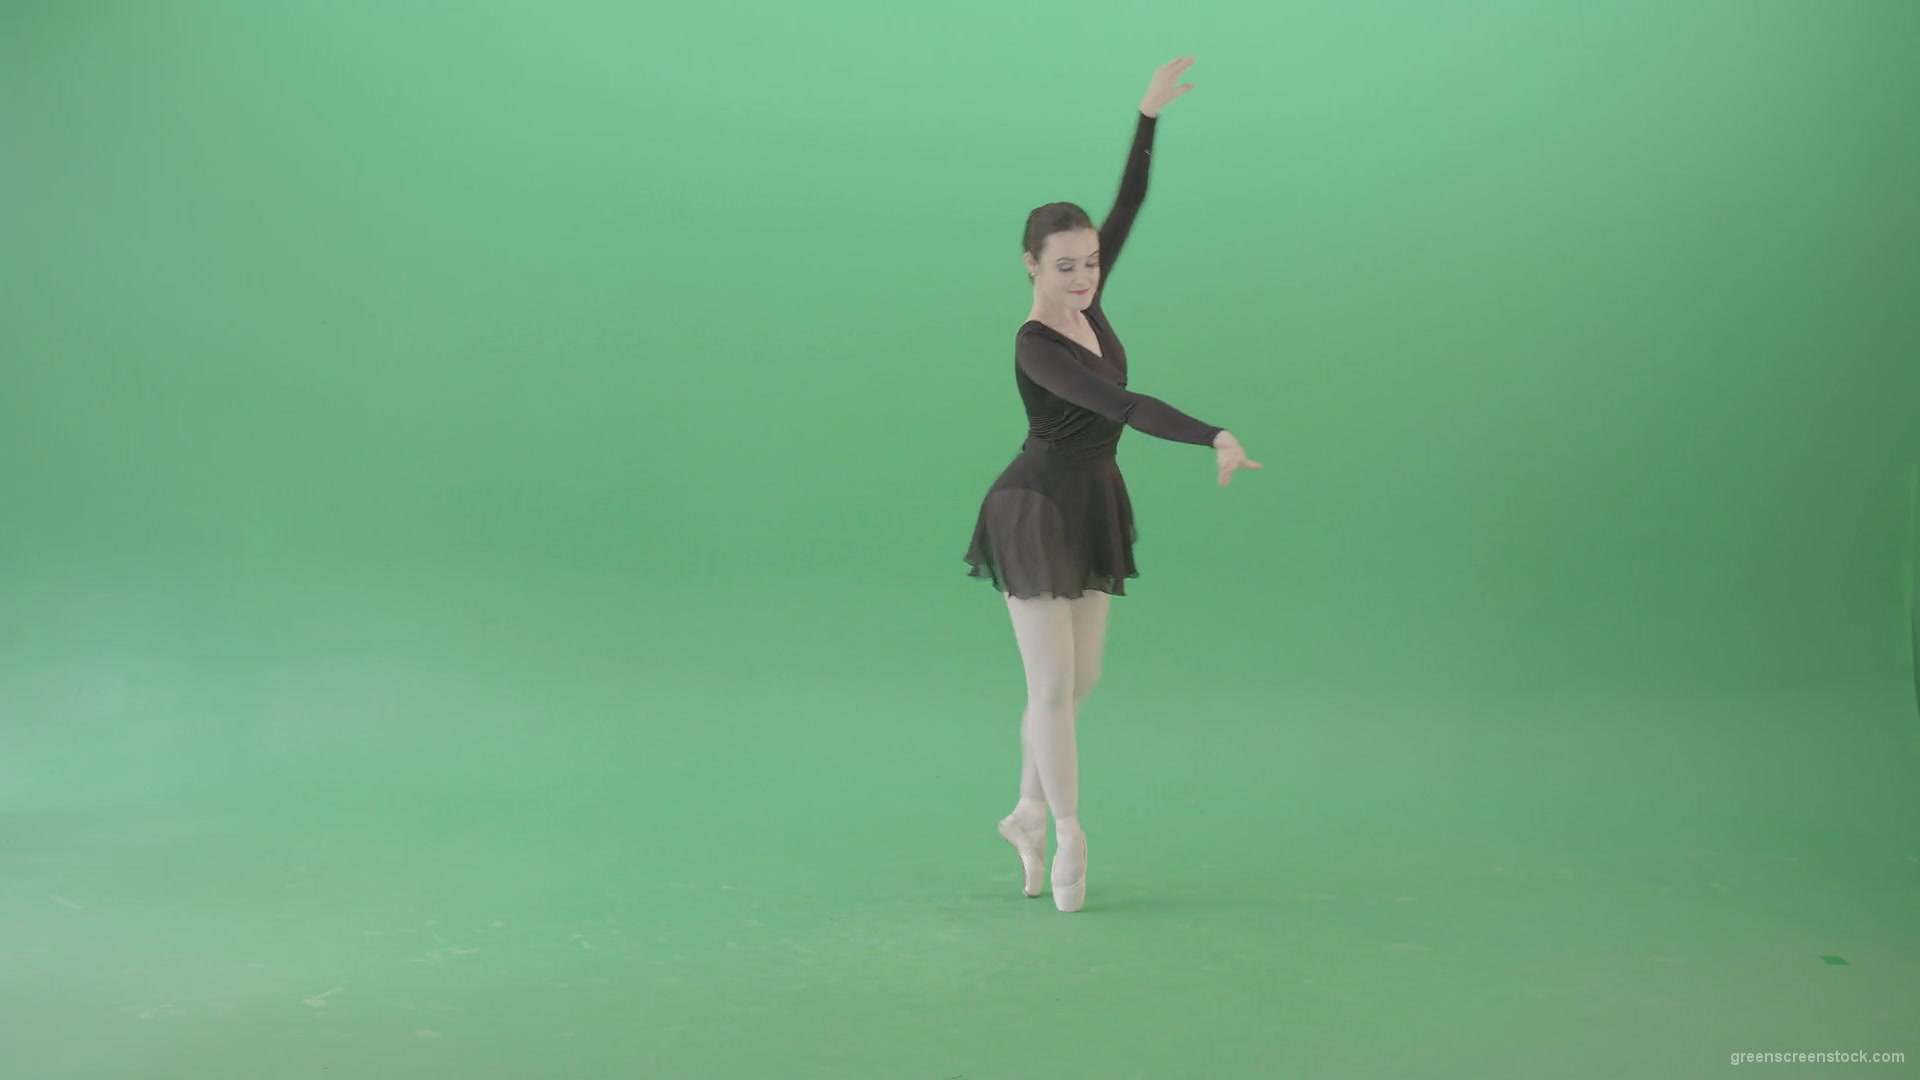 Russian-ballet-dancing-girl-in-black-body-wear-dress-dancing-isolated-on-green-screen-4K-Video-Footage-1920_007 Green Screen Stock